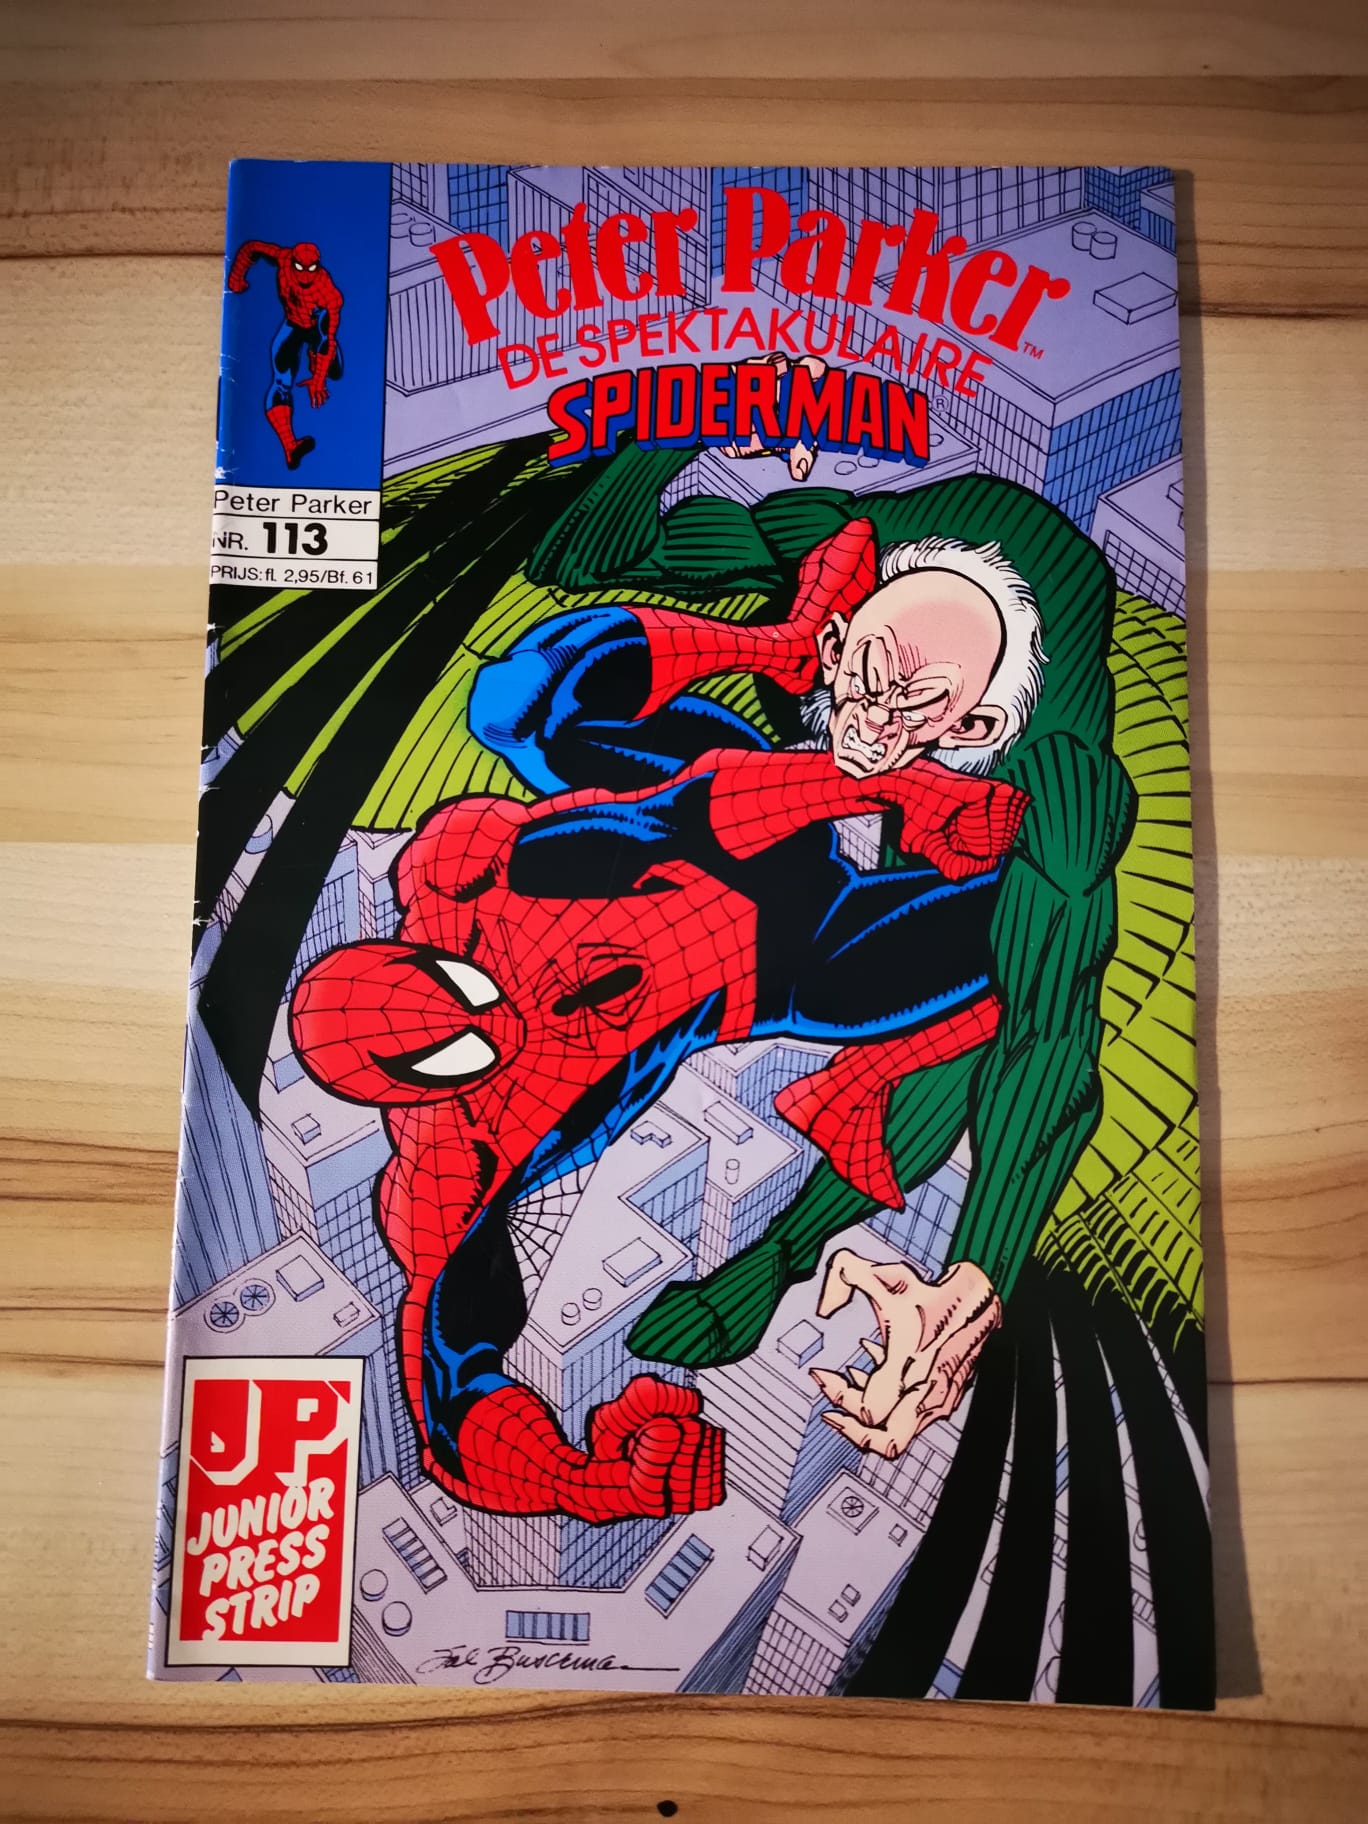 Peter Parker De spektakulaire spiderman #113